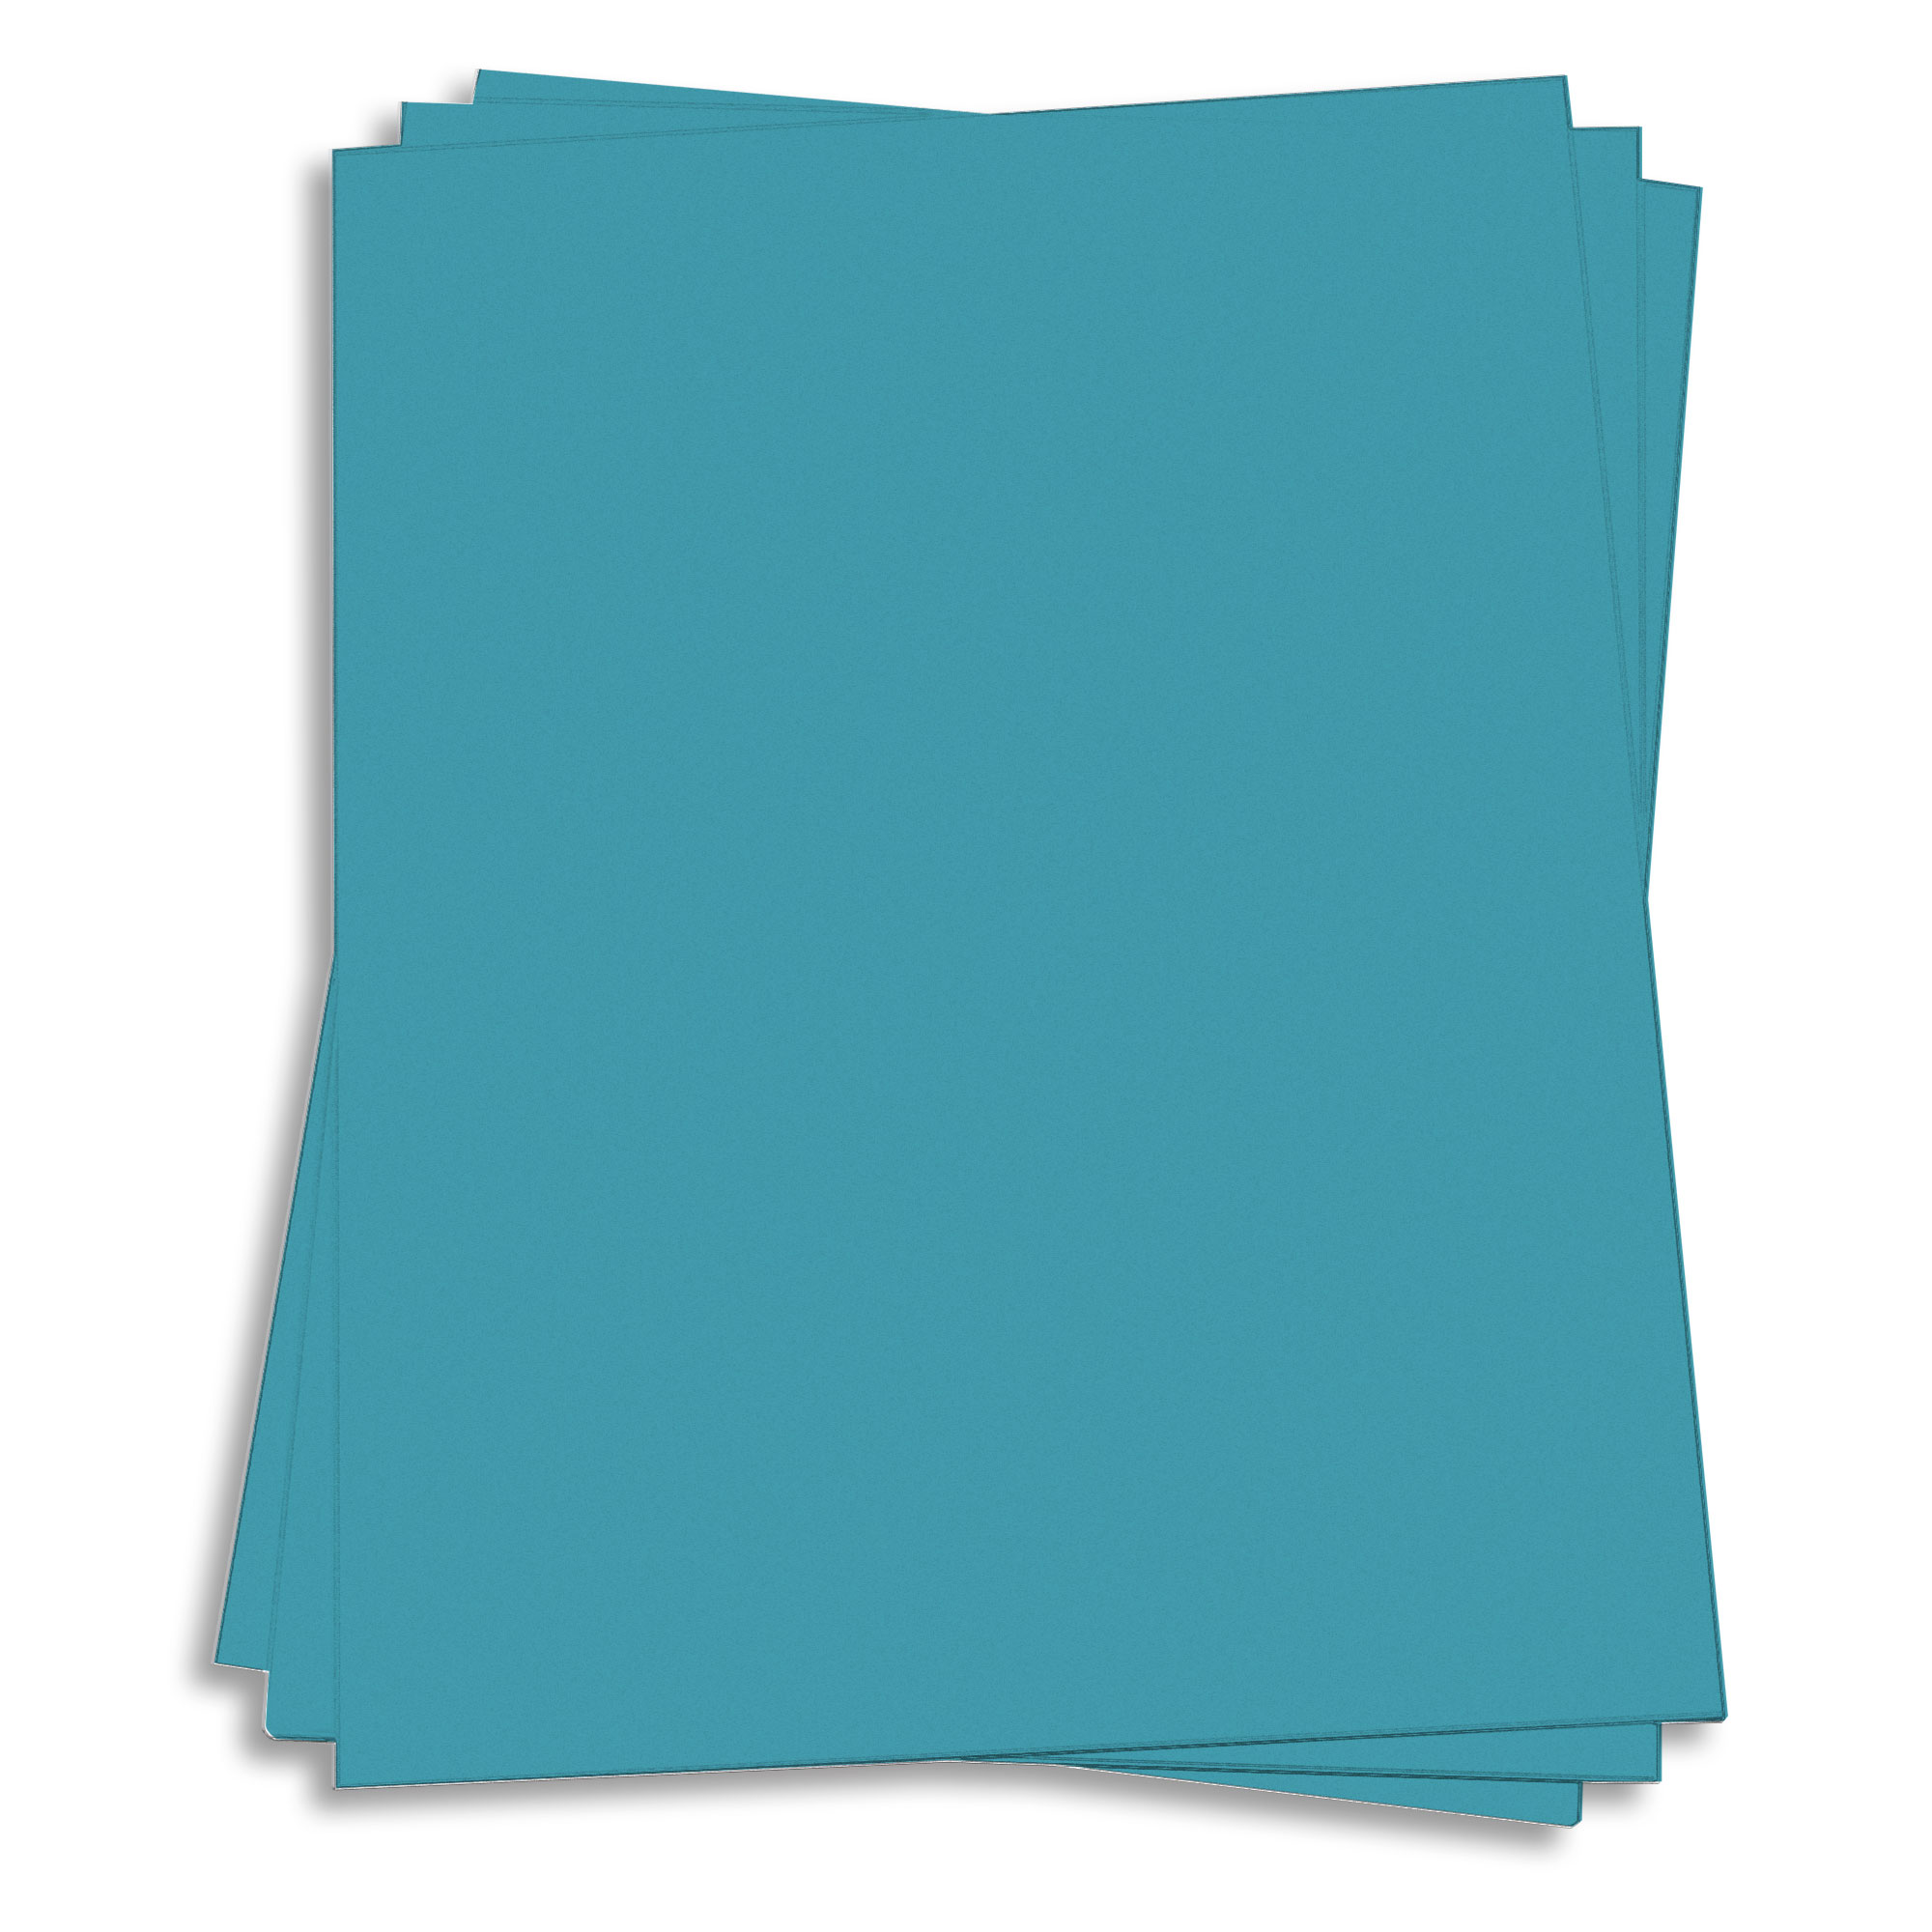 Celestial Blue Card Stock - 8 1/2 x 11 65lb Cover